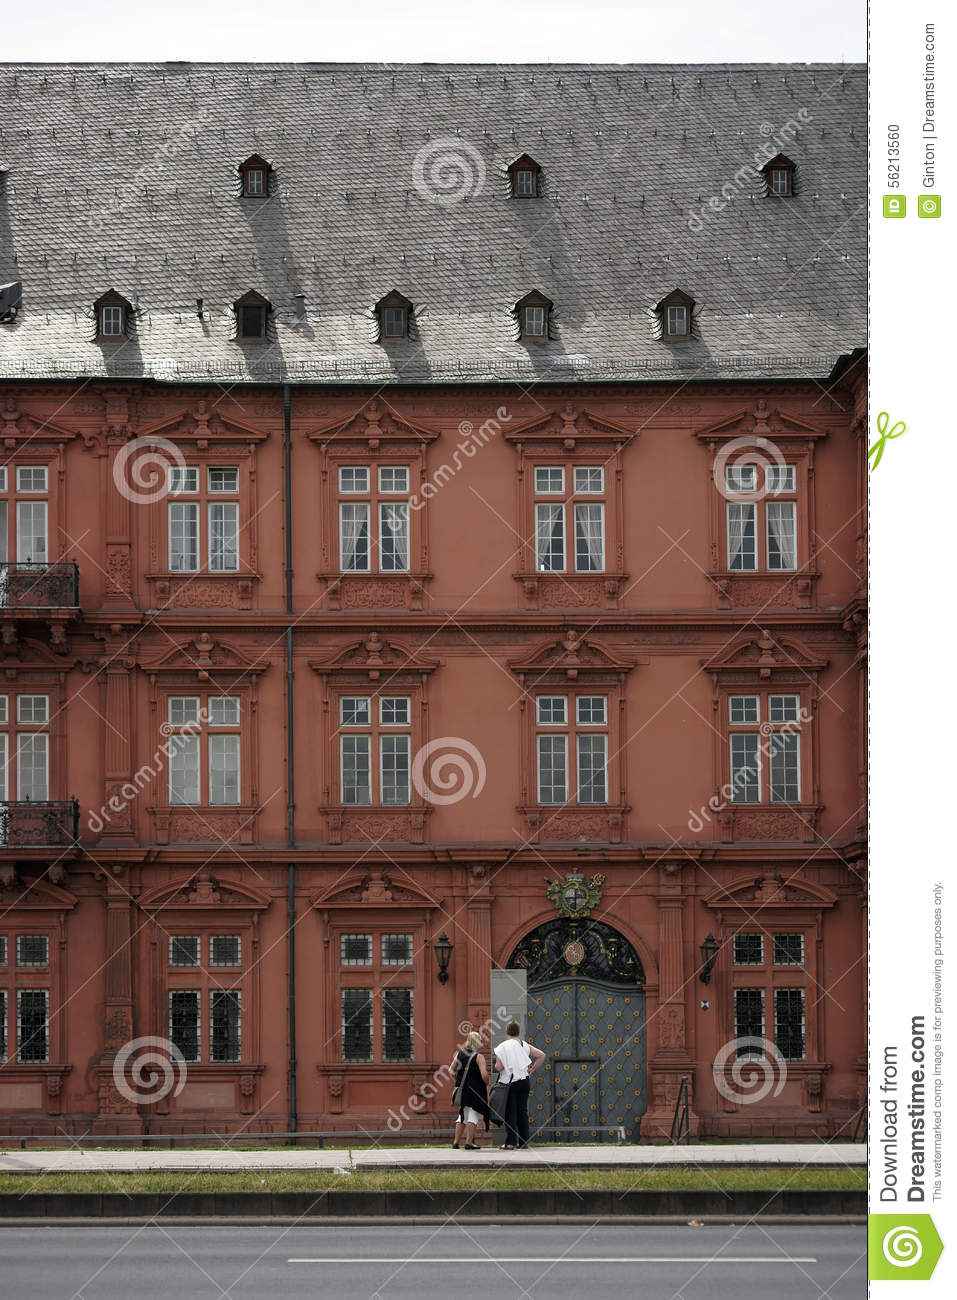 High Resolution Wallpaper | Electoral Palace, Mainz 957x1300 px